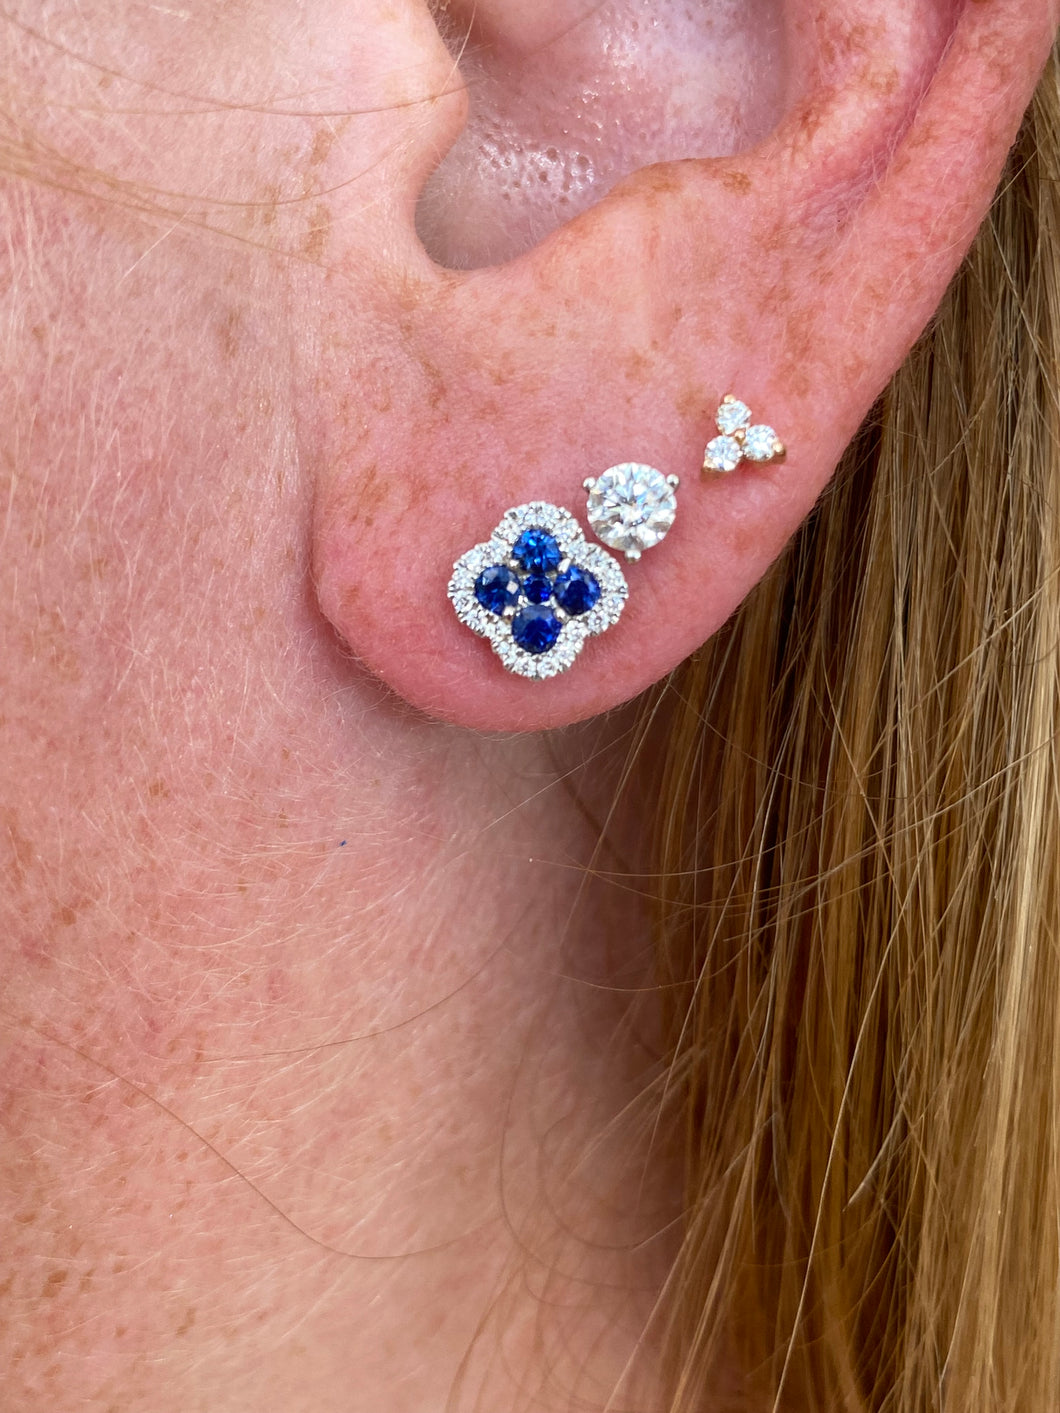 Clover Sapphire and Diamond Stud Earrings